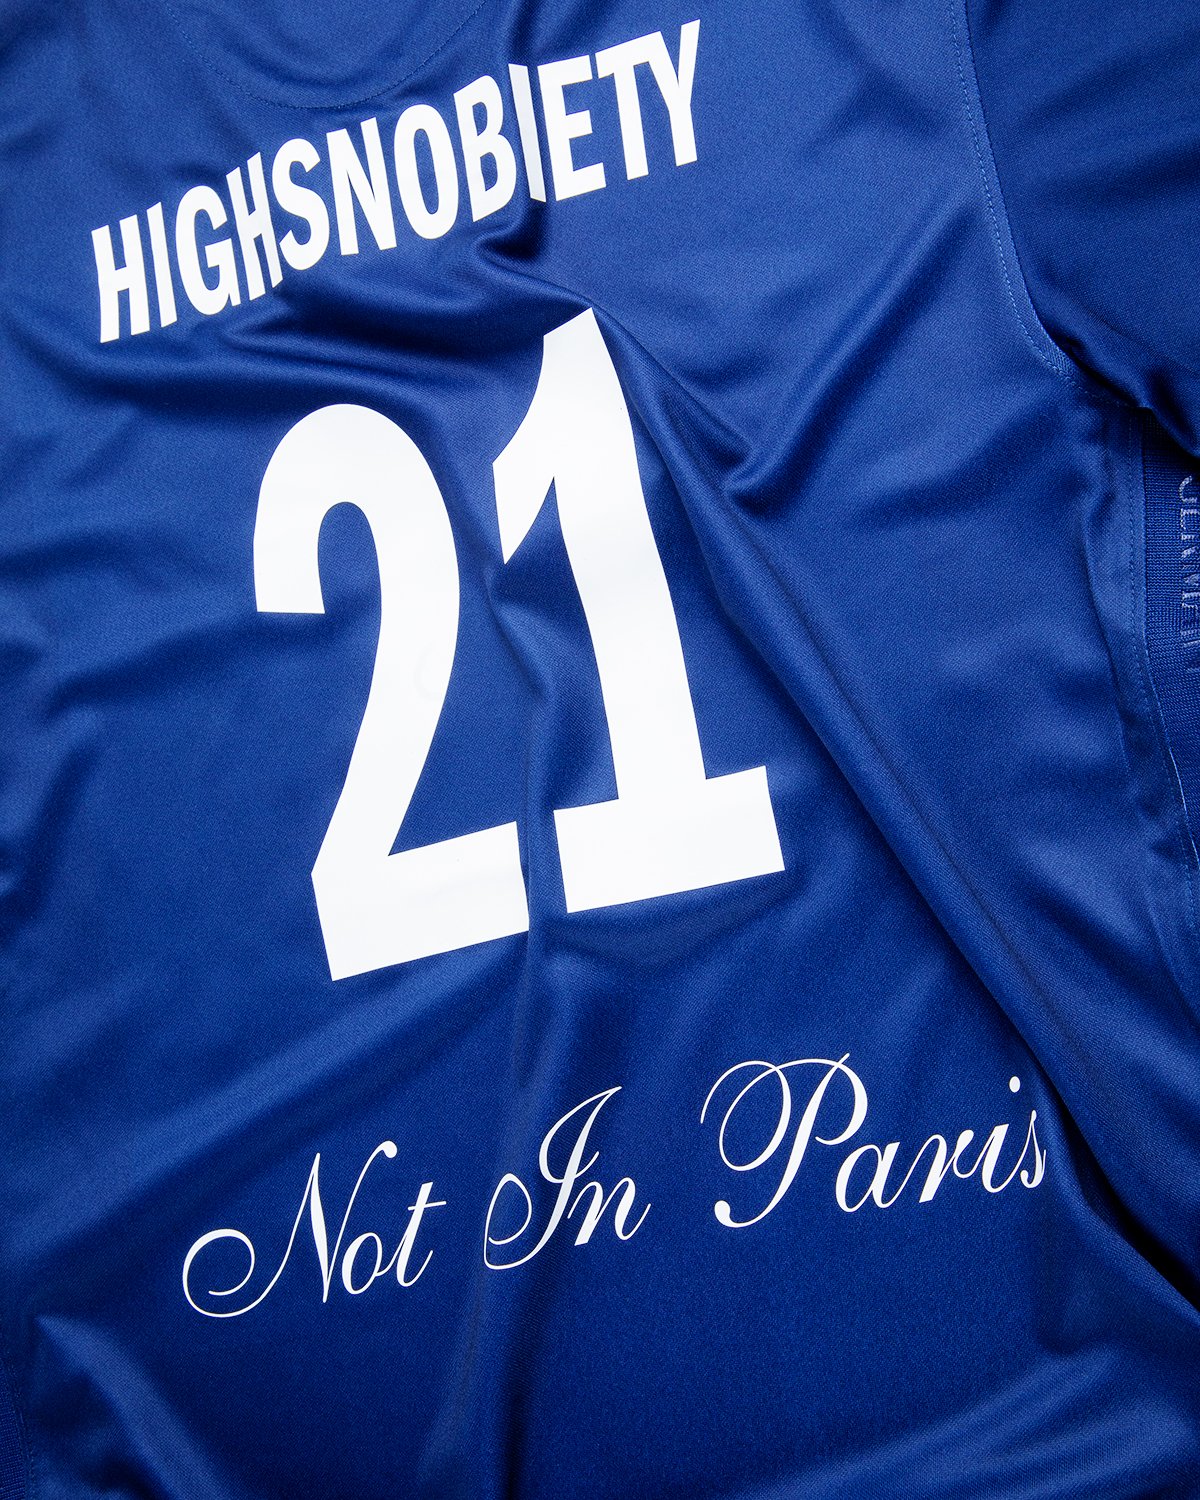 PSG x Highsnobiety - Home Jersey Navy - Clothing - Blue - Image 5